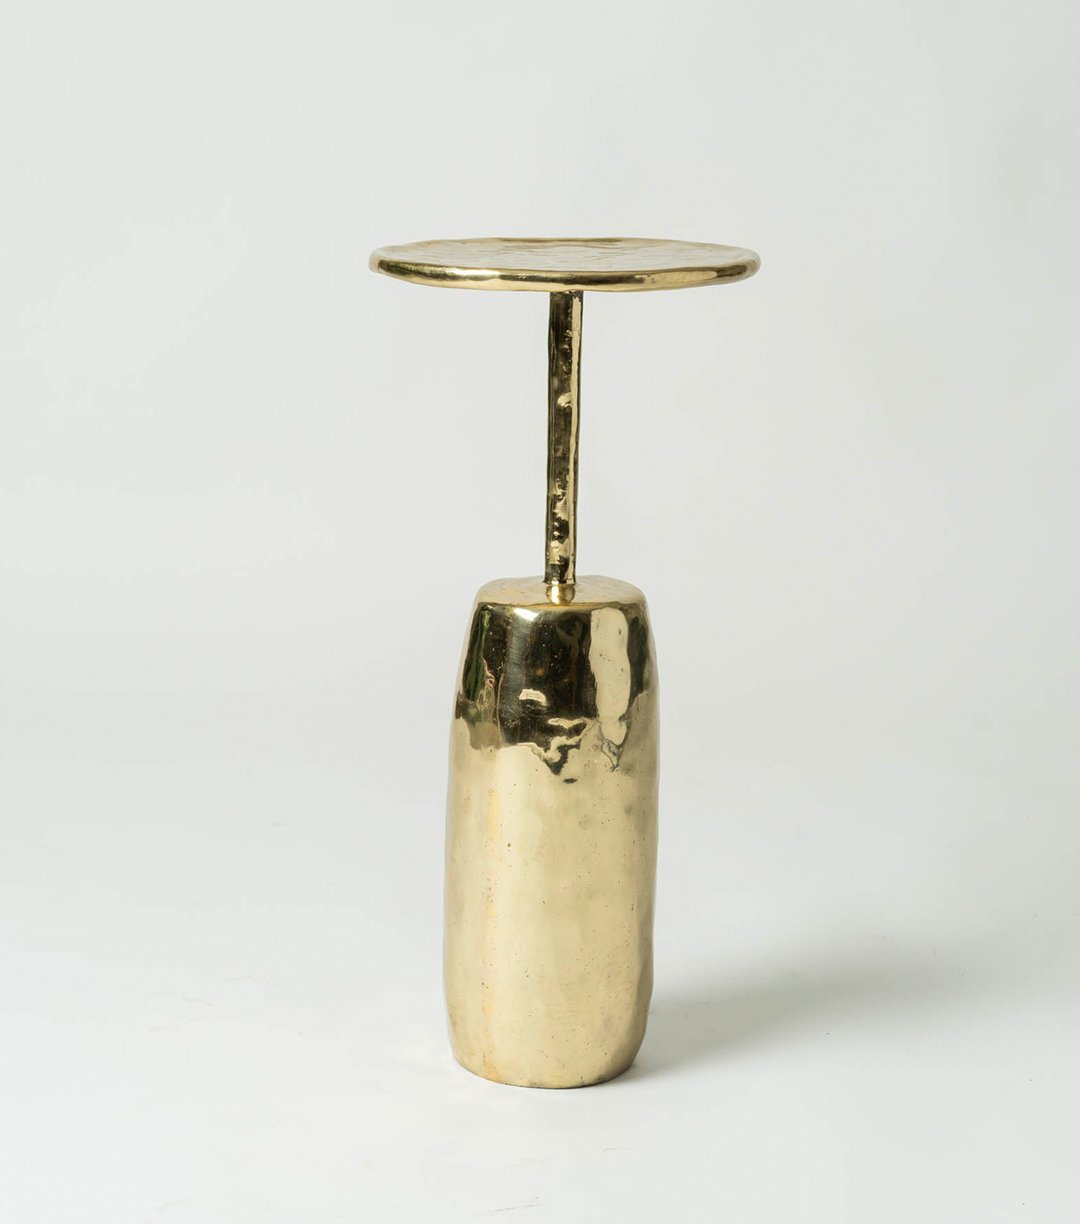 Sand-case Brass Cocktail Table designed by the Ravi Vazirani Design Studio in Effect Magazine